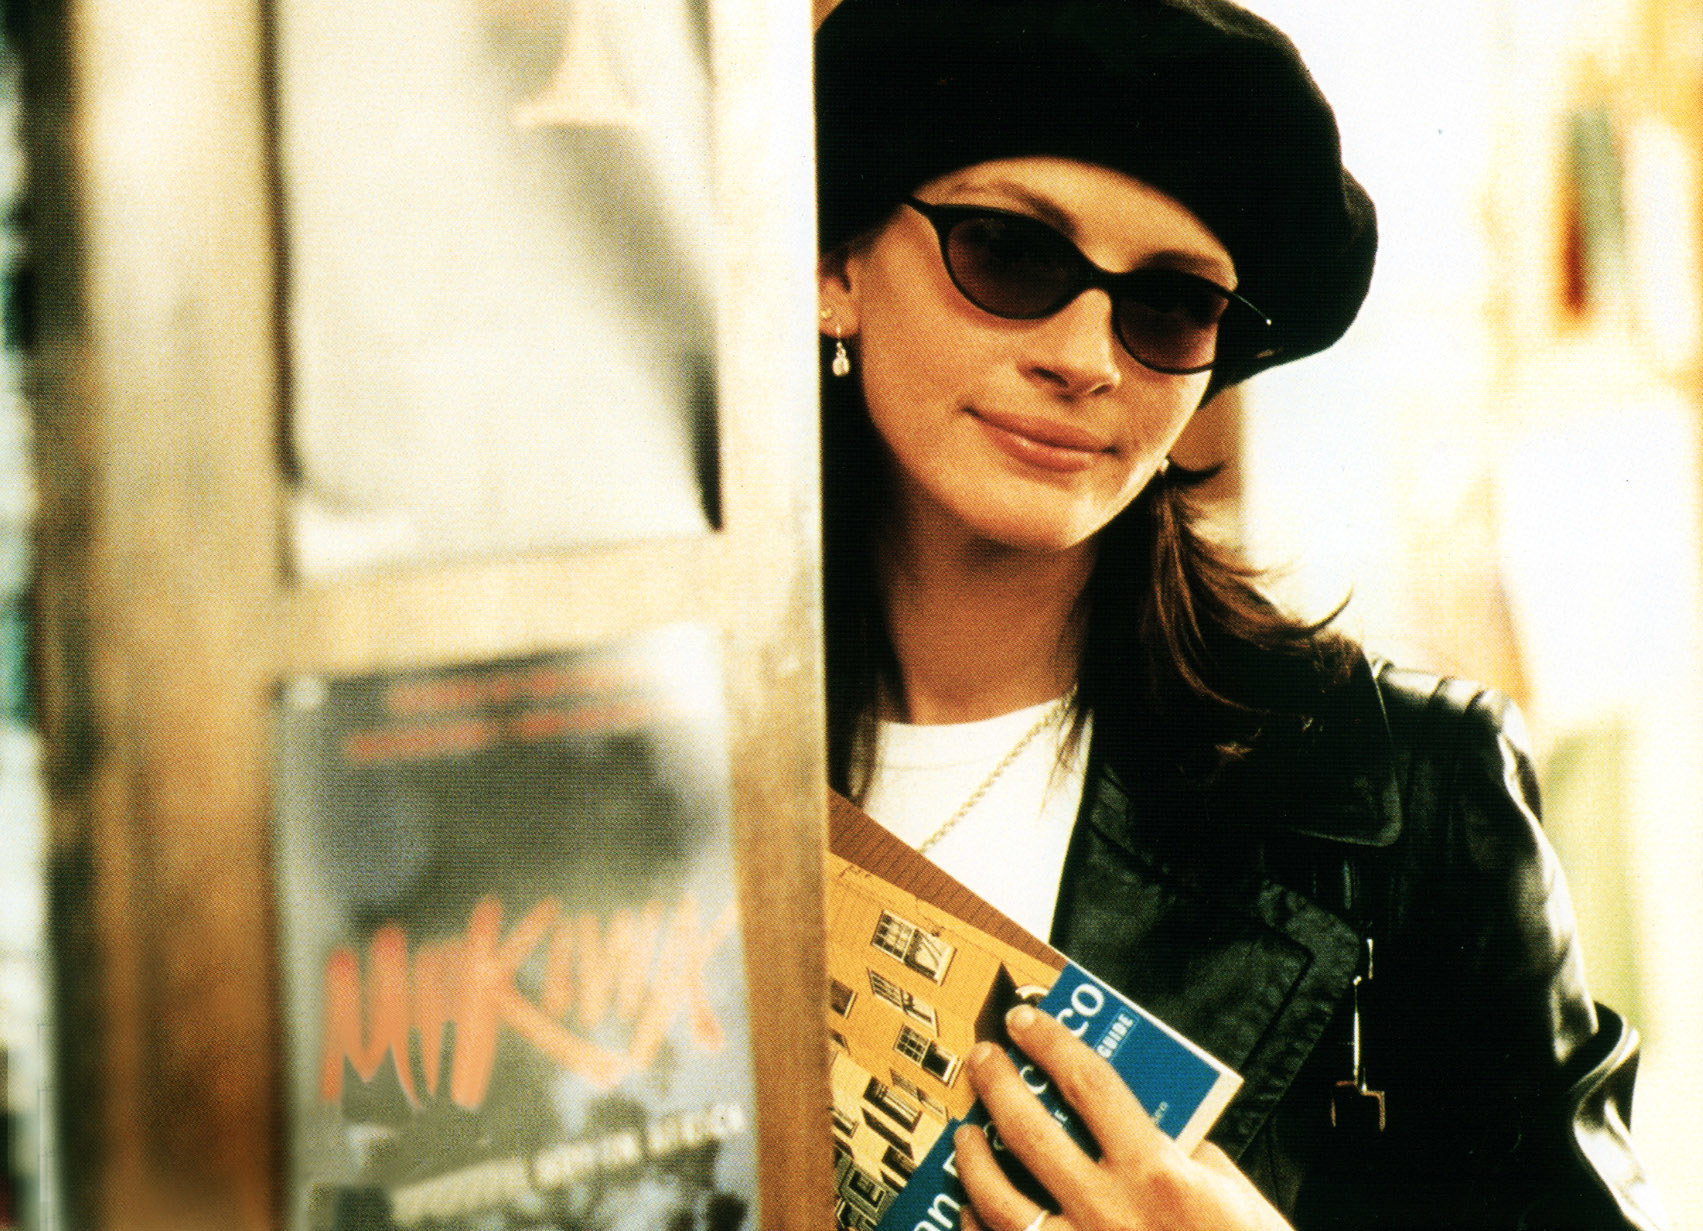 Julia Roberts holding a book.